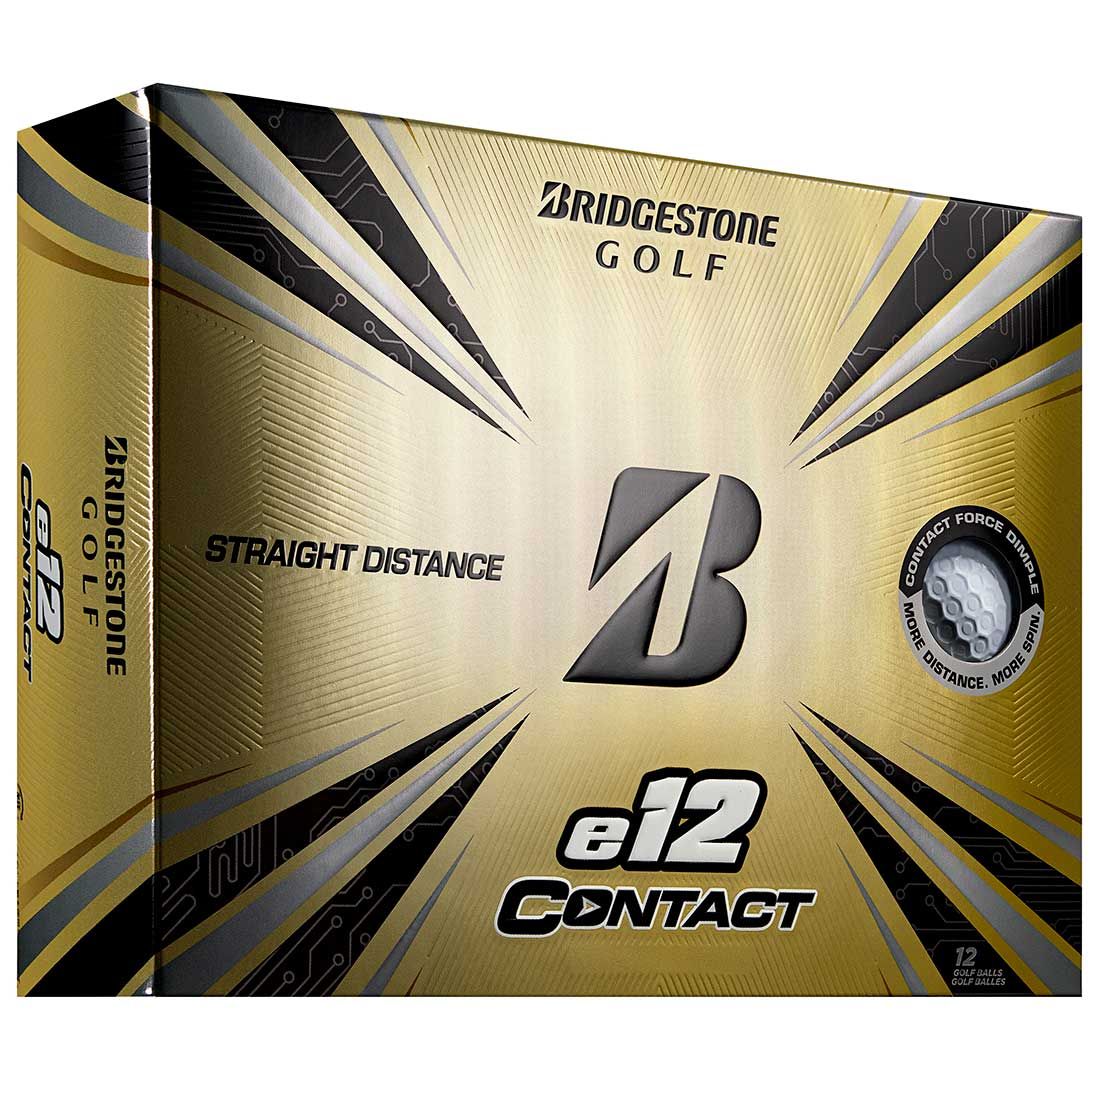 Bridgestone e12 Contact - 12 Palline